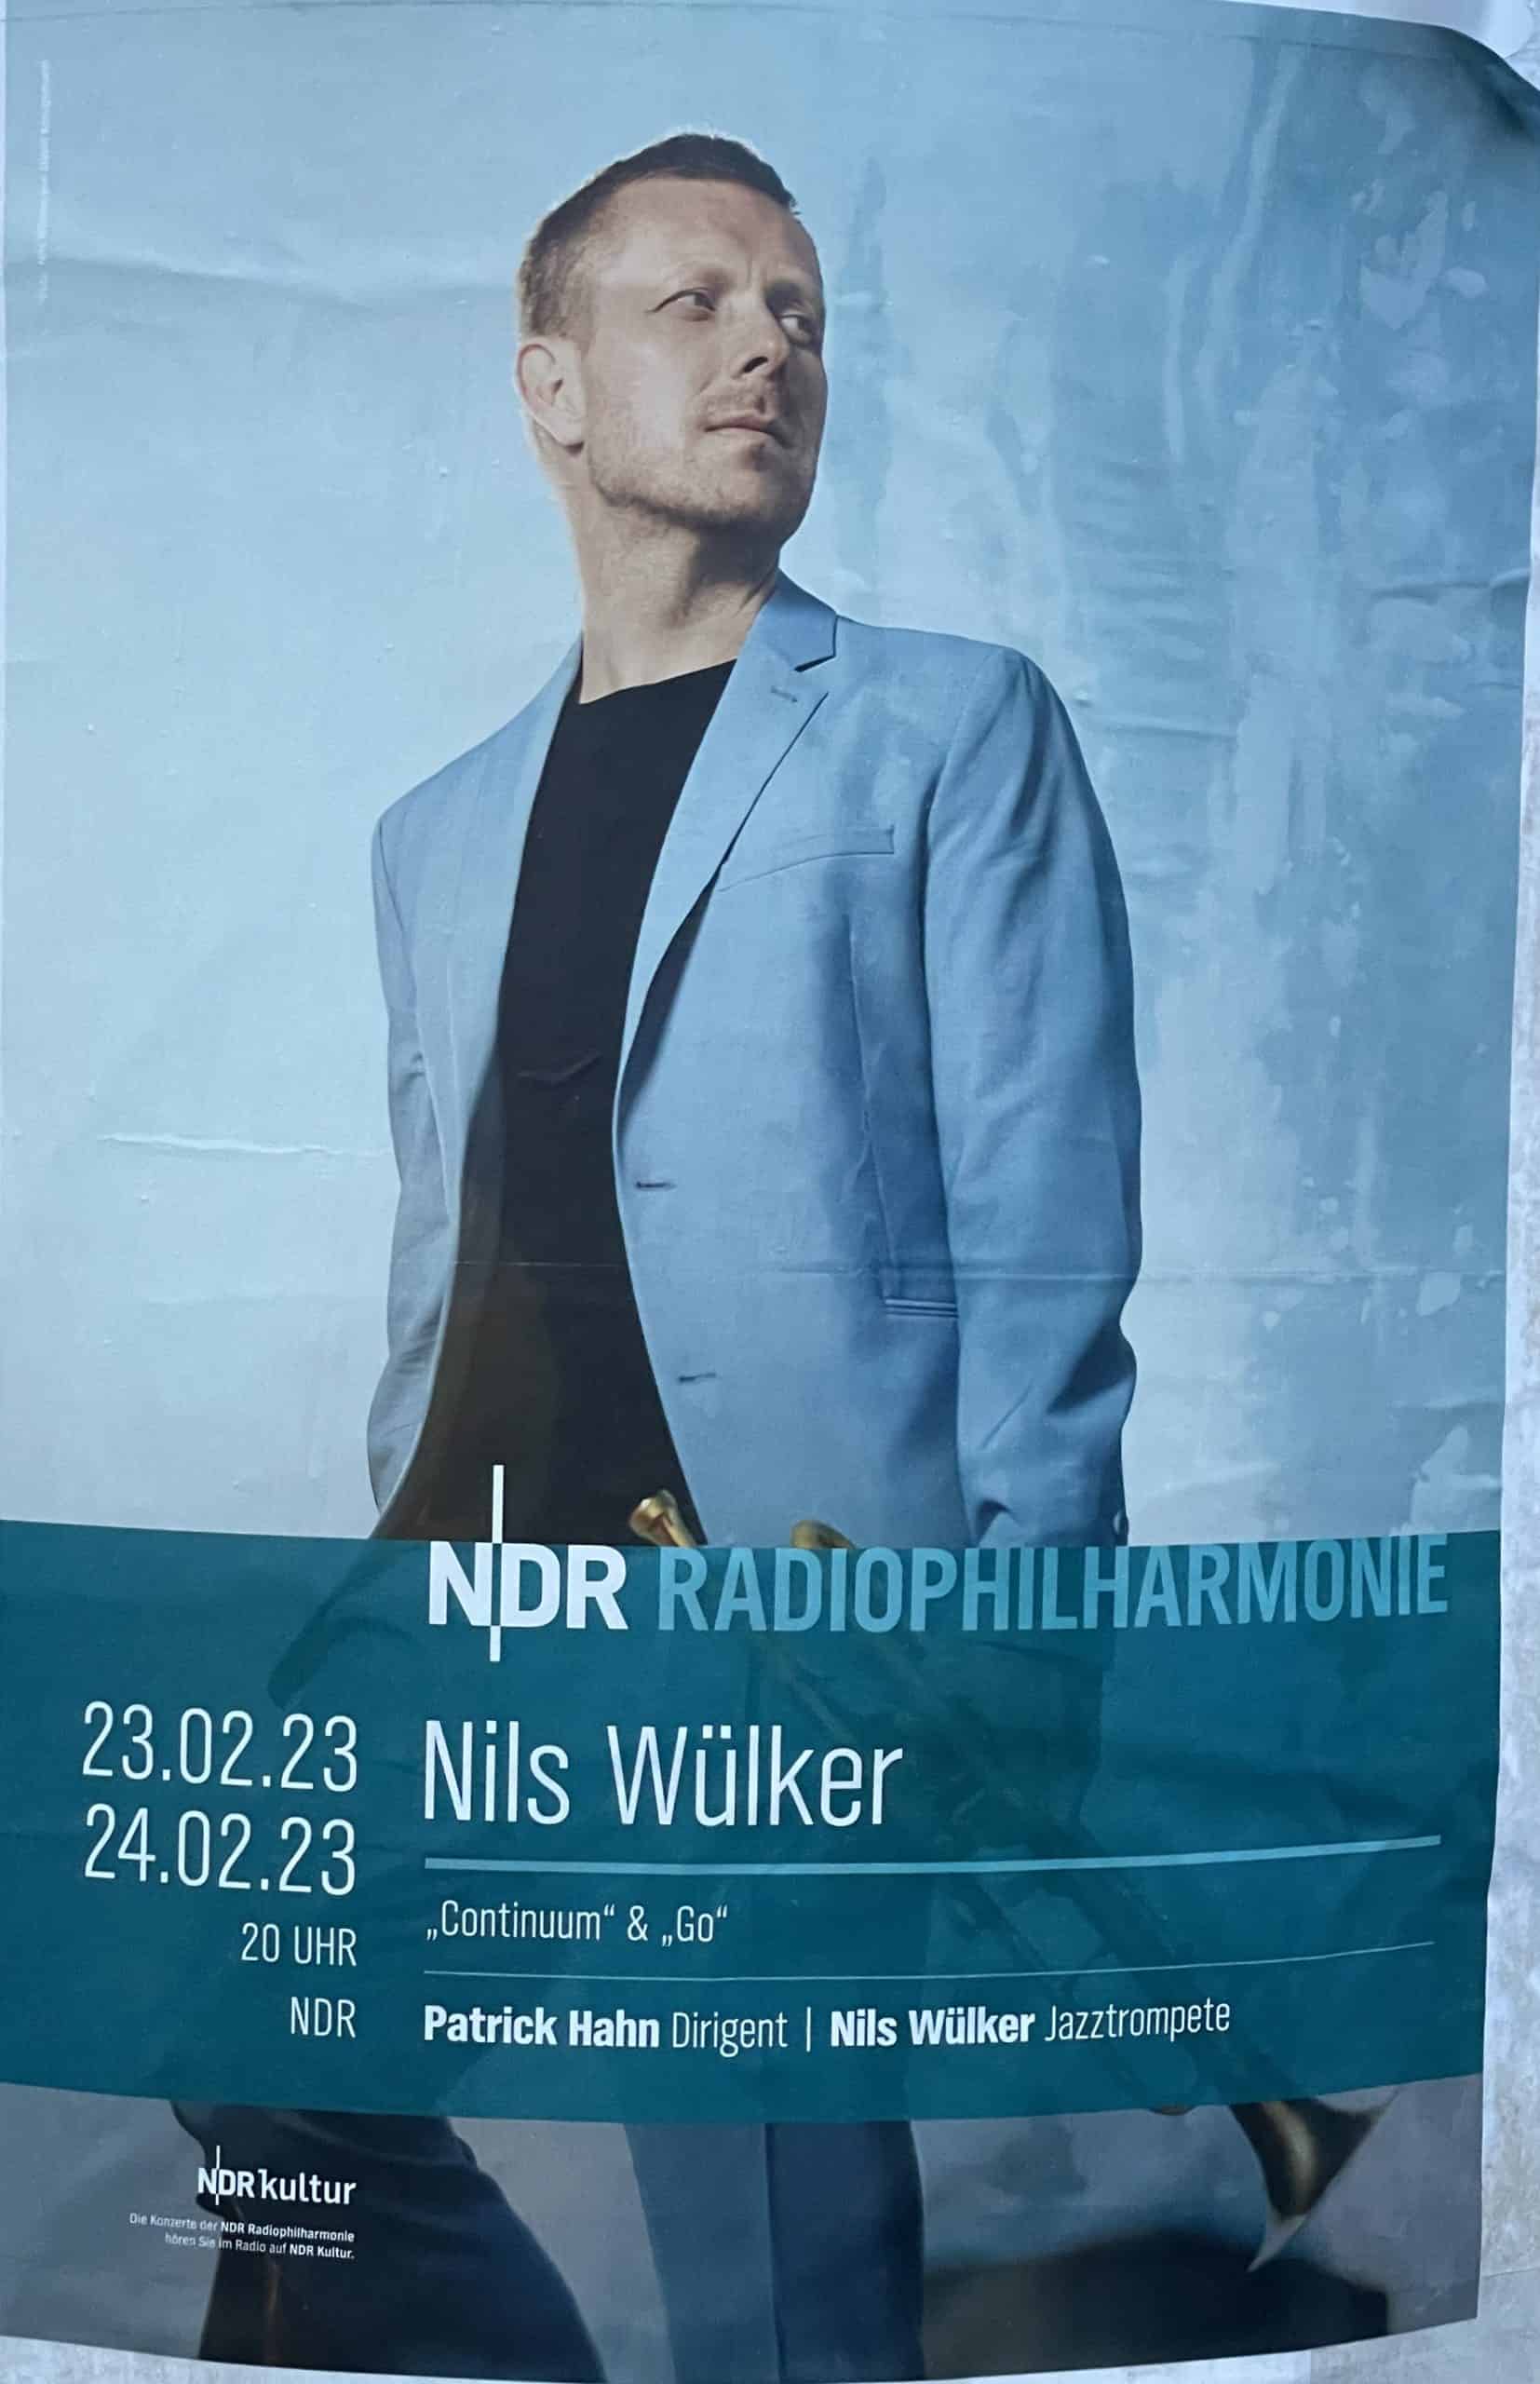 NDR Radiophilharmonie: Nils Wülker